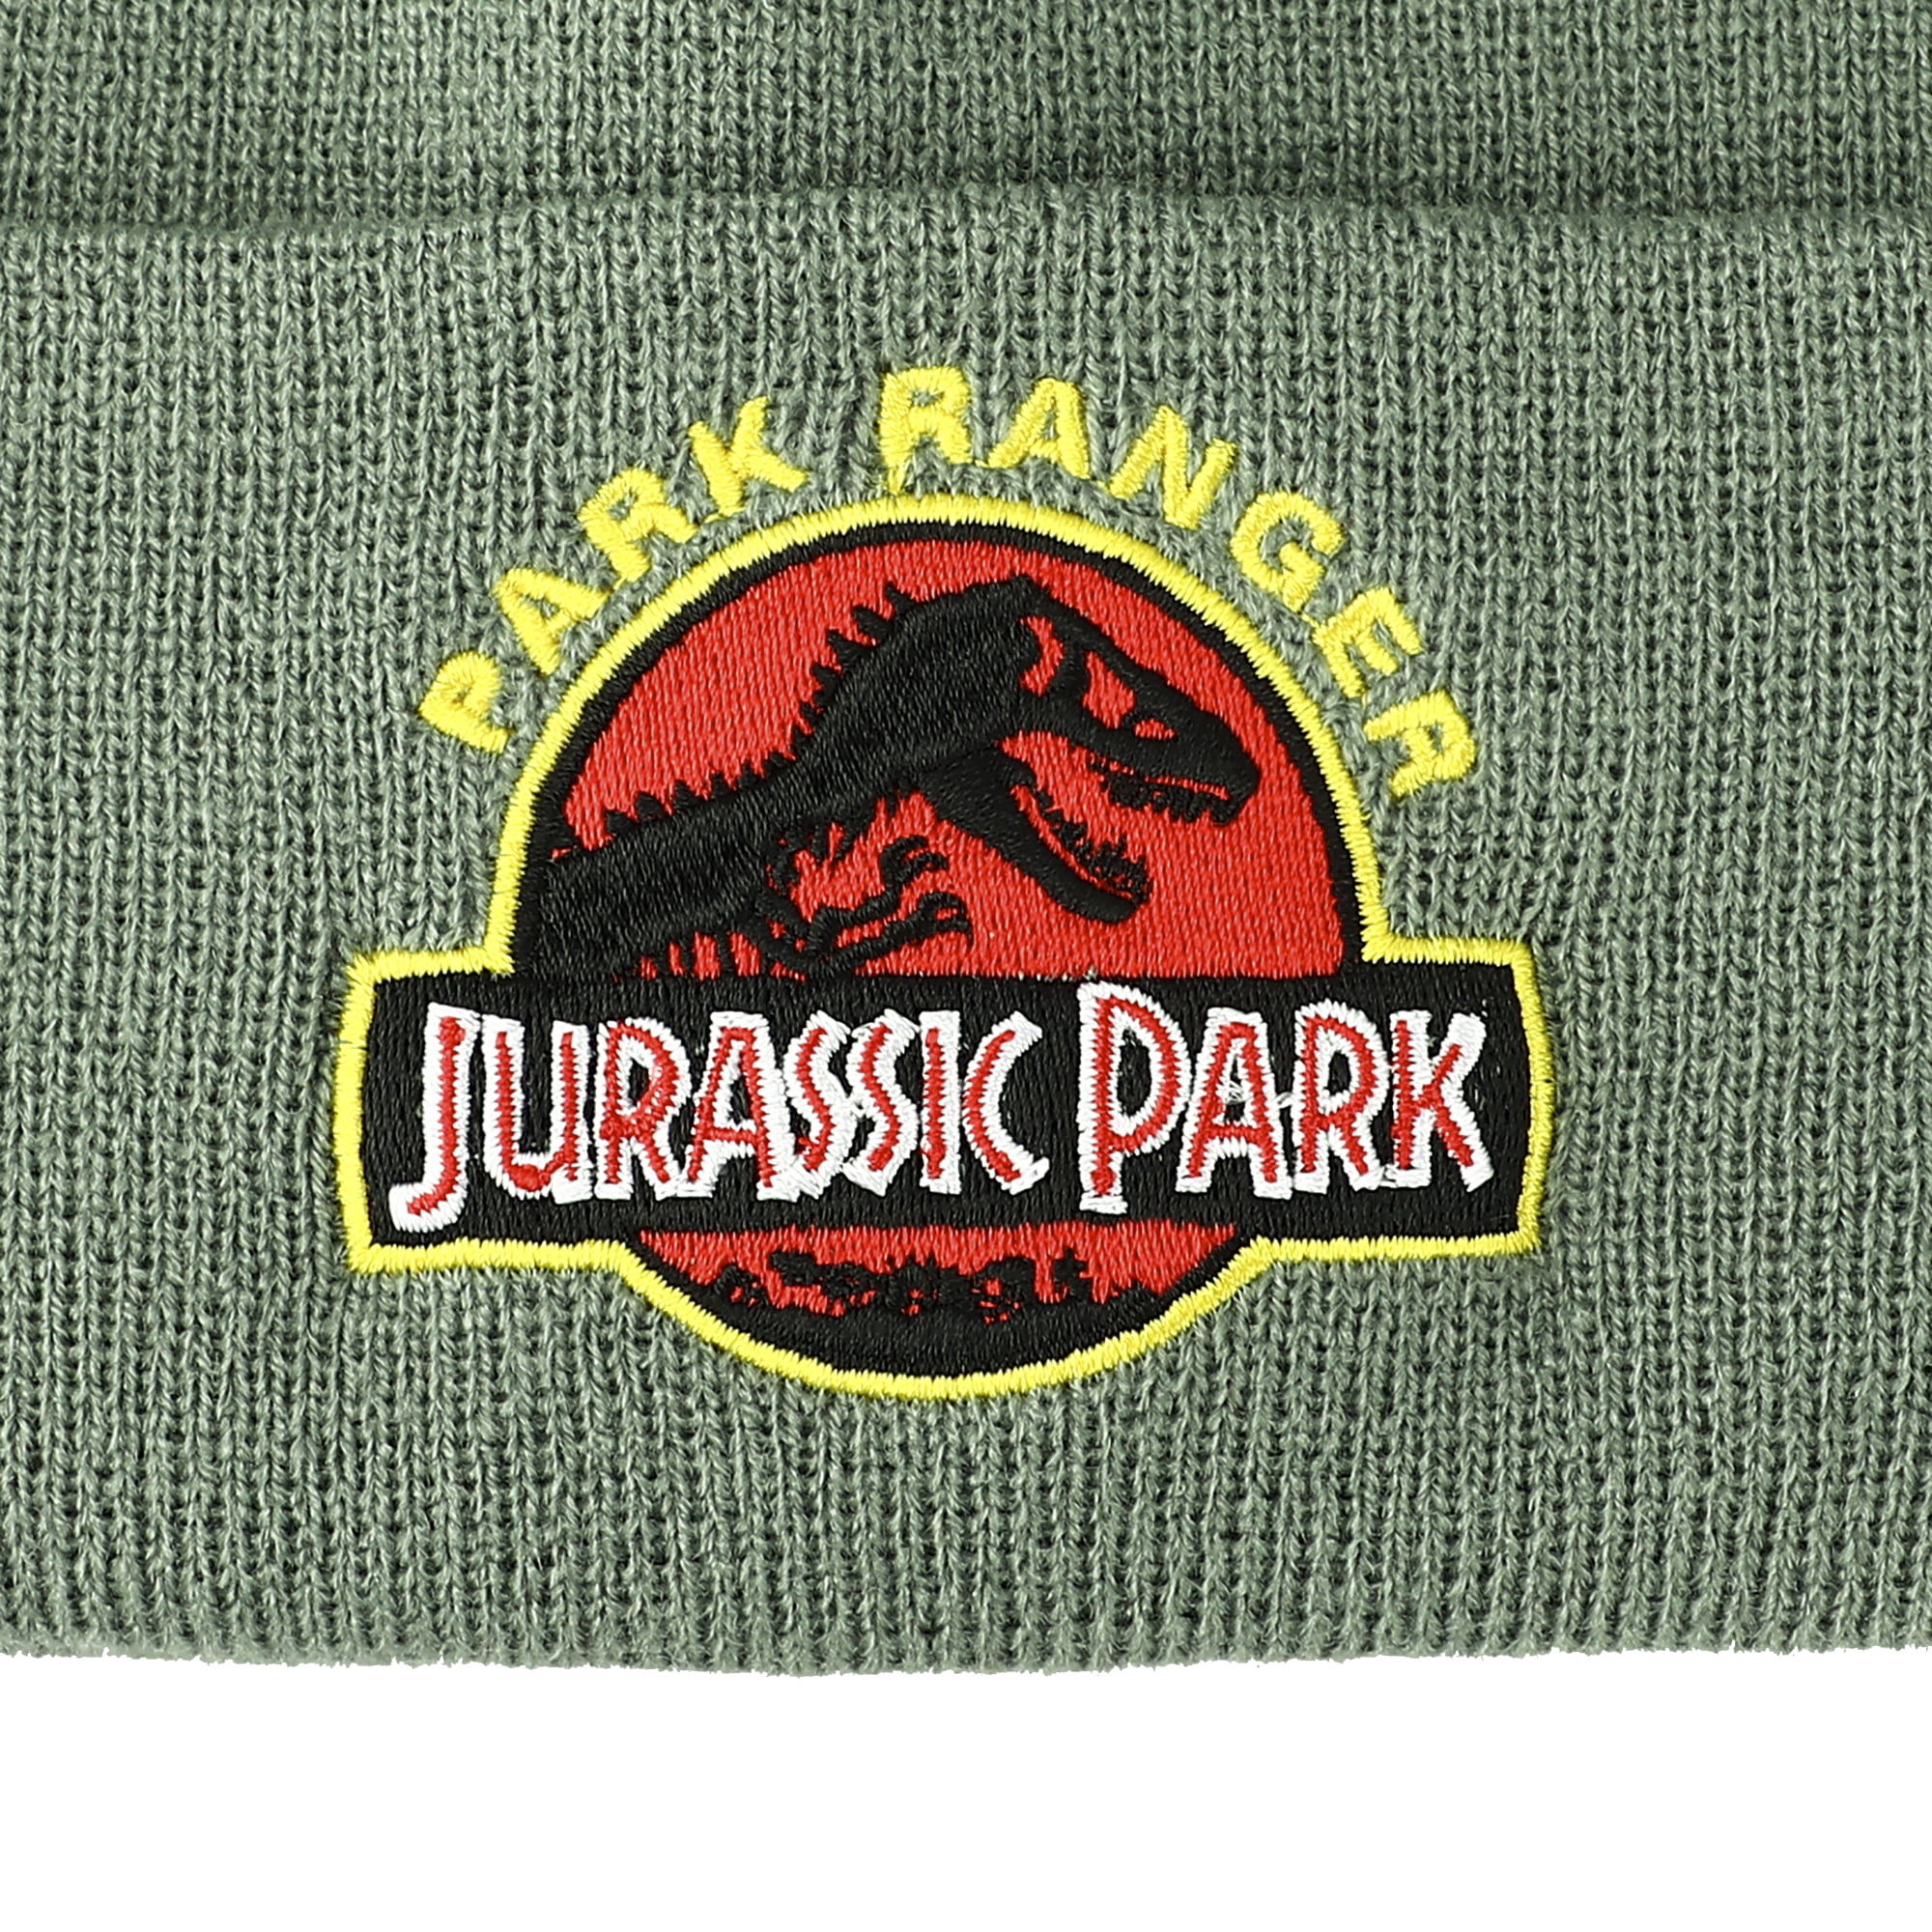 Jurassic Green Cuffed Knitted Ranger Park Embroidered Beanie hat Logo